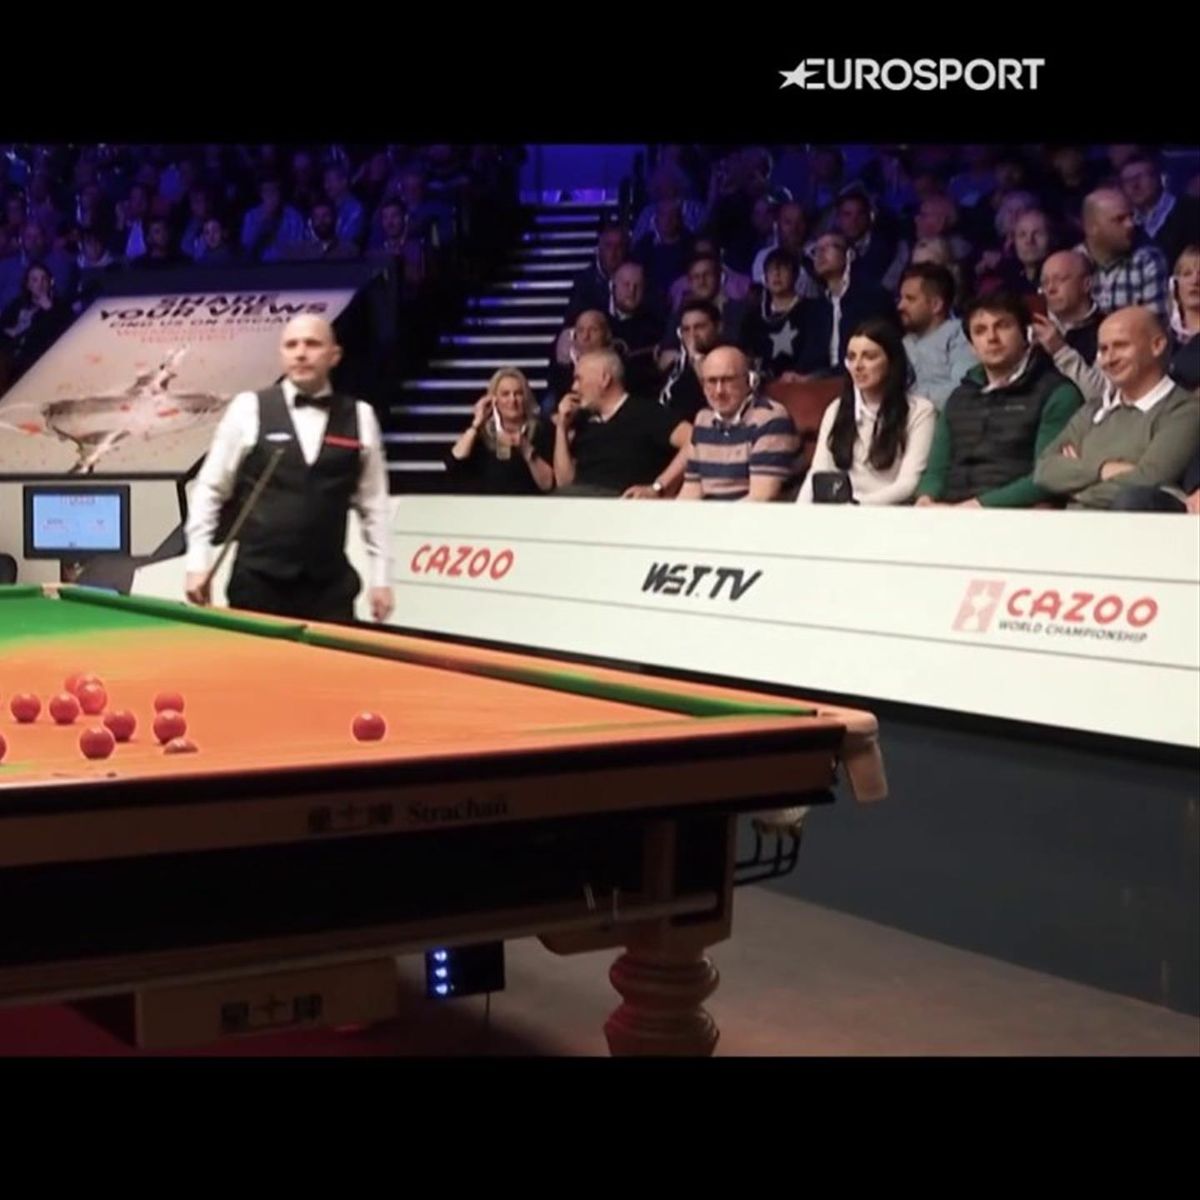 Eurosport on X: 𝗪𝗵𝗼 𝘄𝗶𝗹𝗹 𝗯𝗲 𝗖𝗵𝗮𝗺𝗽𝗶𝗼𝗻 𝗼𝗳 𝘁𝗵𝗲  𝗖𝗿𝘂𝗰𝗶𝗯𝗹𝗲? 🏆 📺 The 2023 World Snooker Championship starts Saturday  𝙇𝙄𝙑𝙀 on Eurosport and discovery+ #CazooWorldChampionship, @WeAreWST